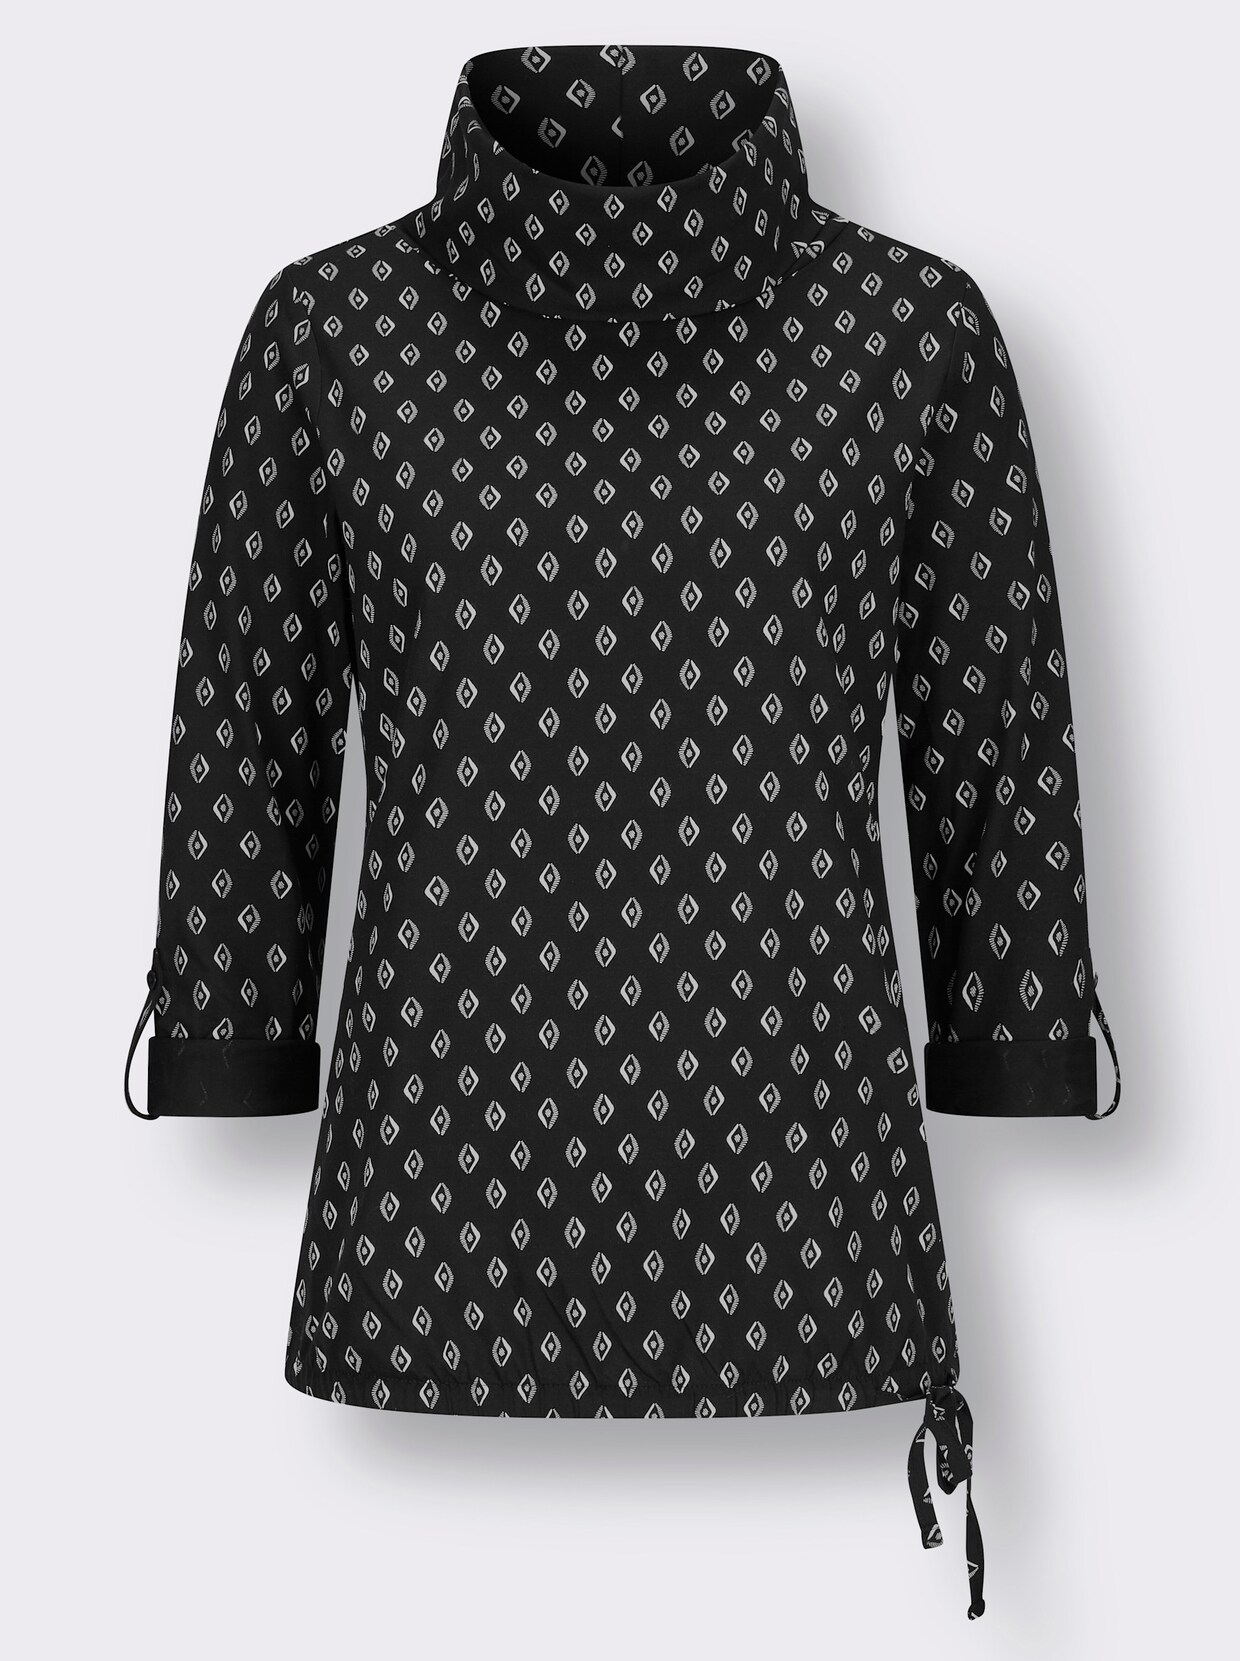 Rollkragen-Shirt - schwarz-ecru-bedruckt